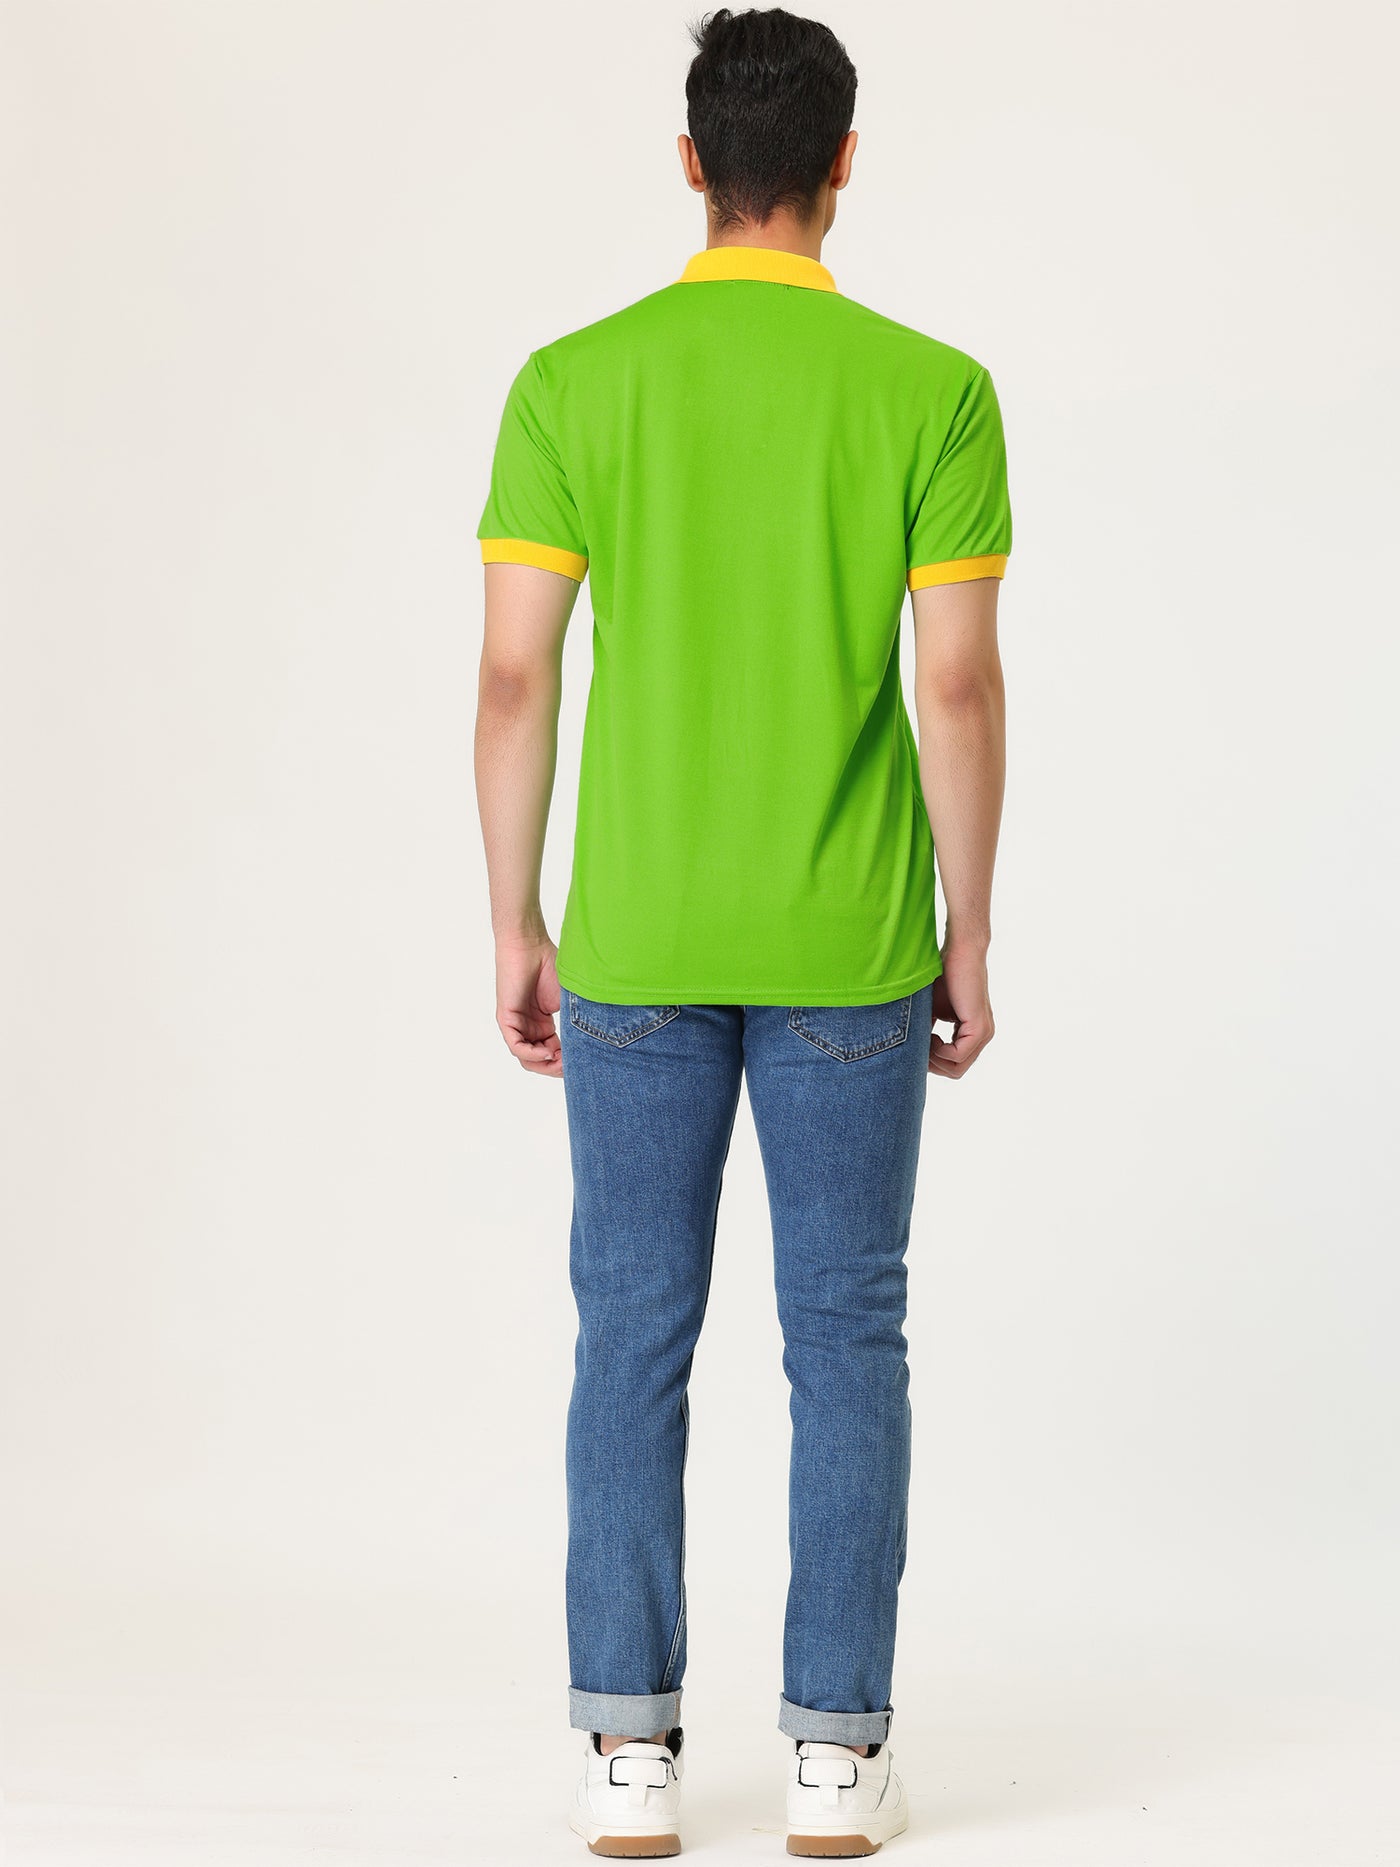 Bublédon Casual Short Sleeve Contrast Color Golf Polo T-Shirt